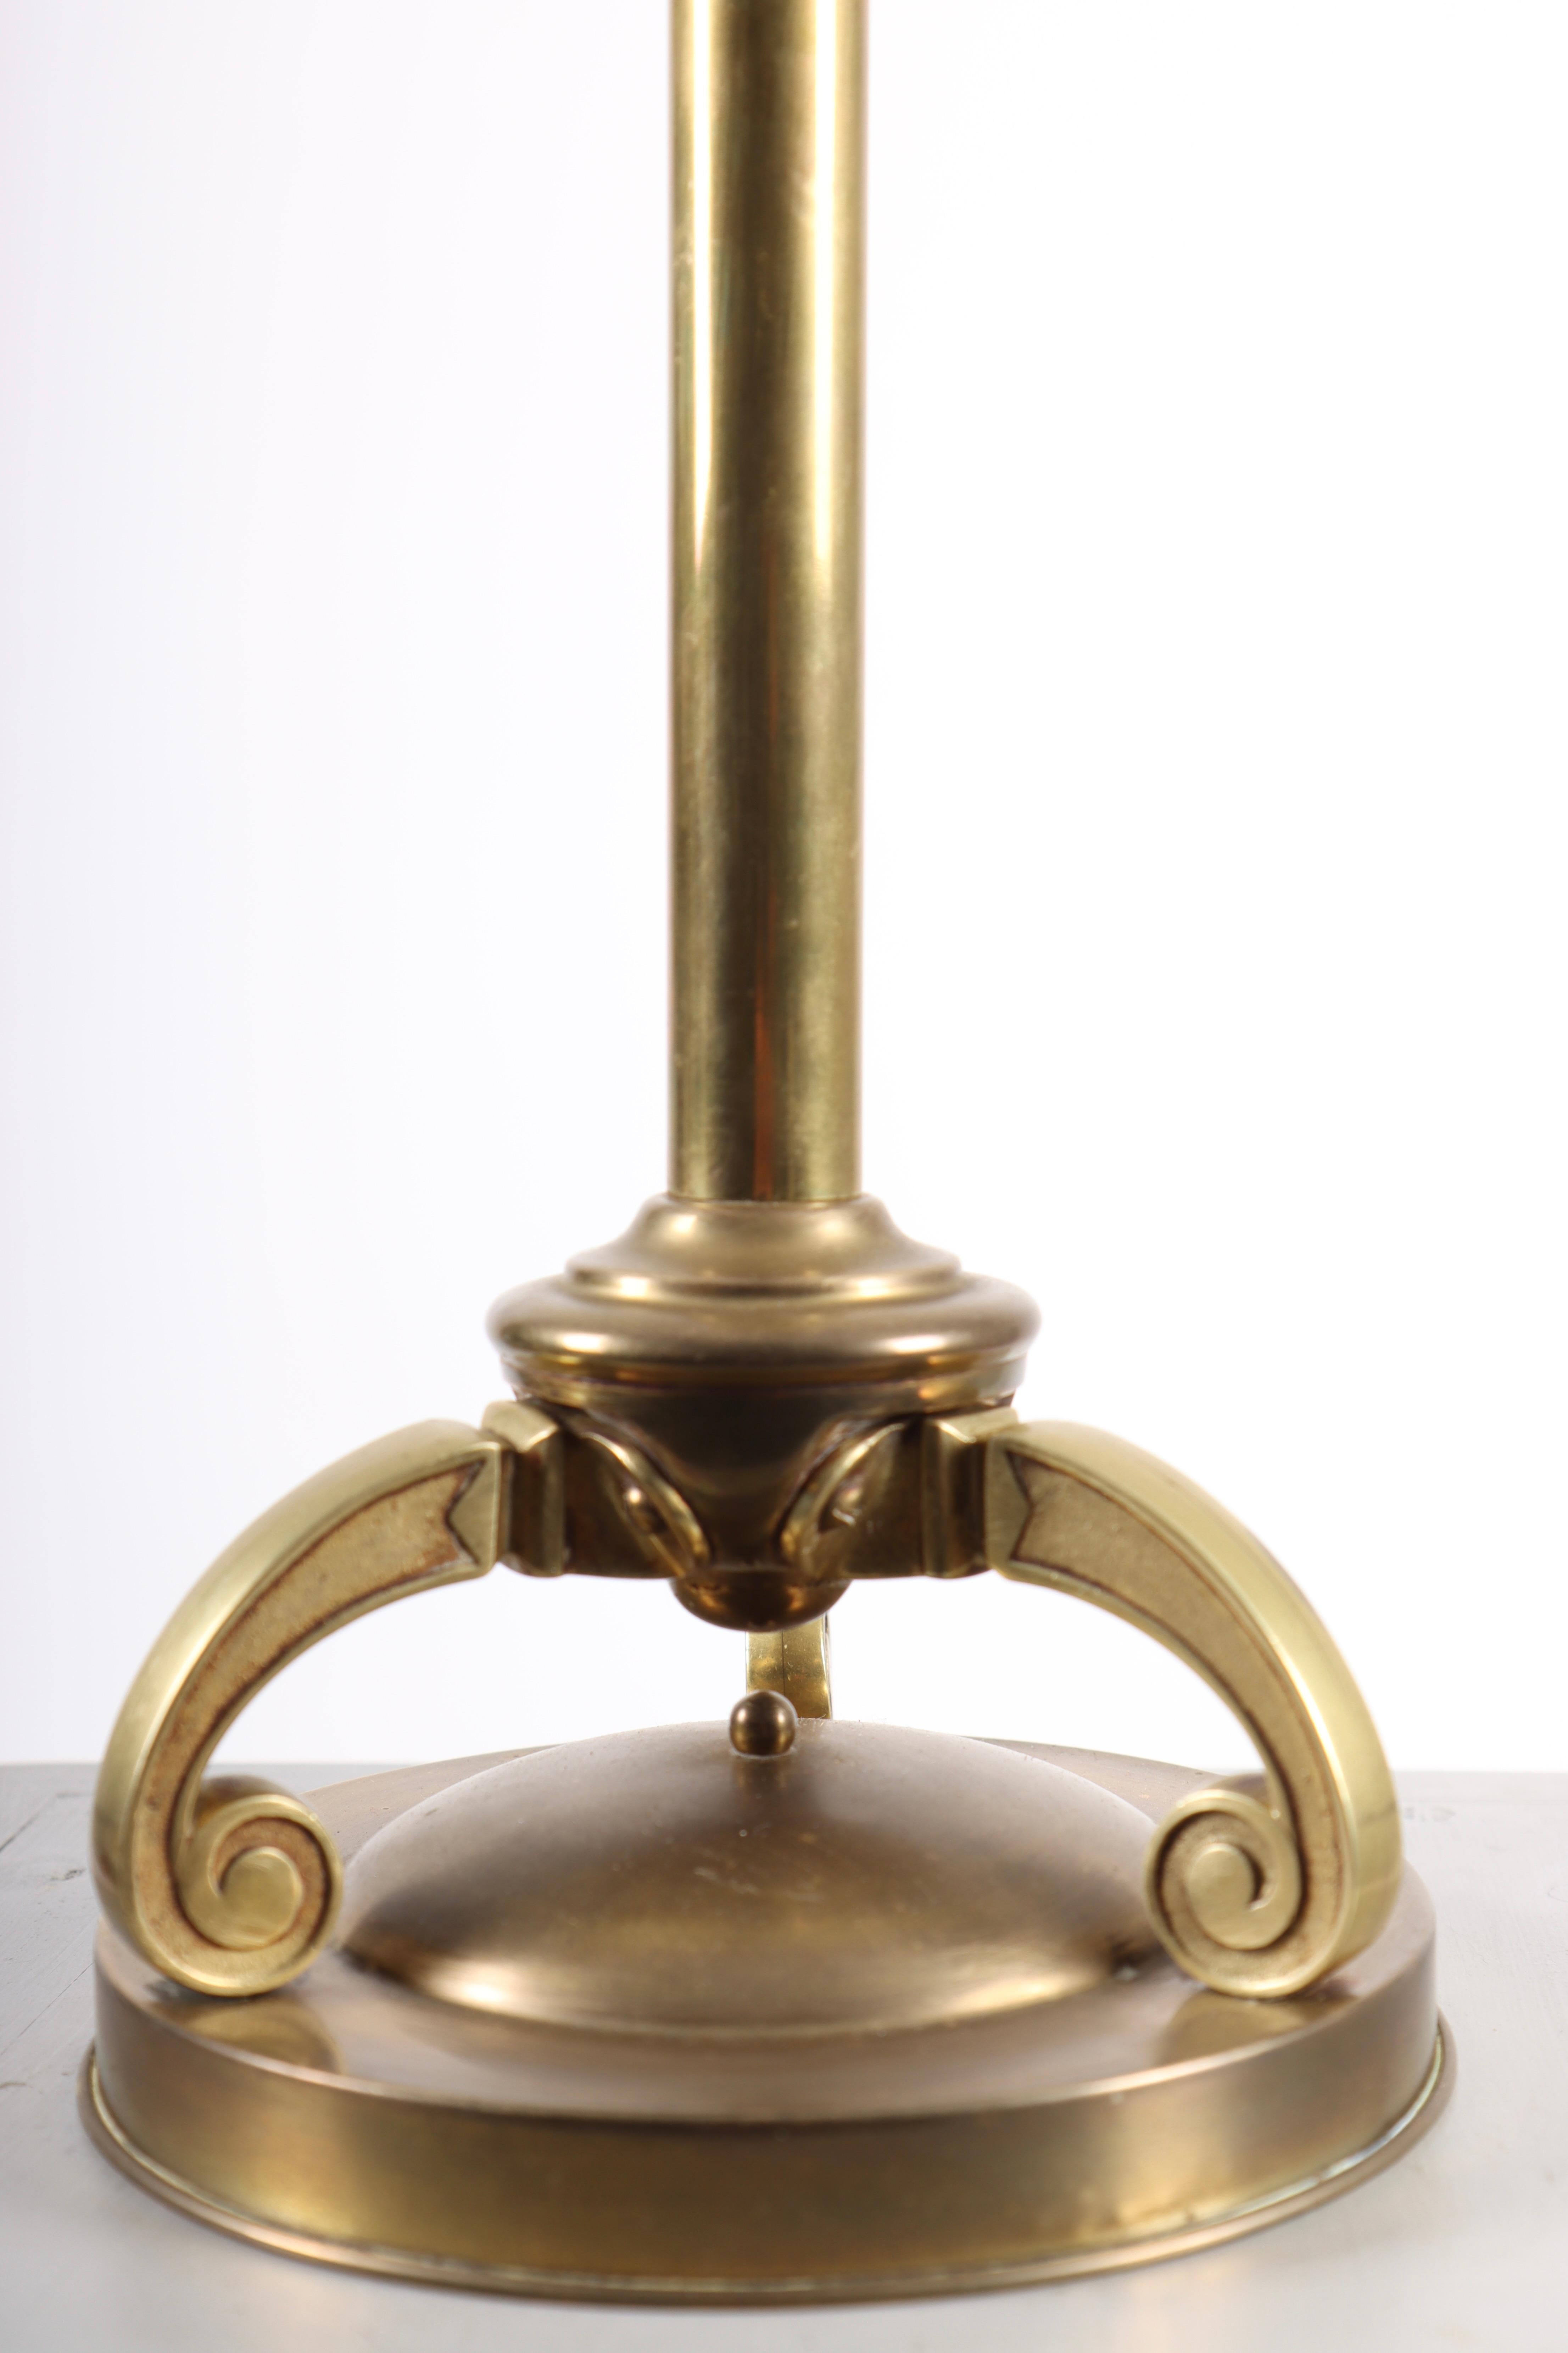 Scandinavian Modern Table Lamp in Brass by Fog & Mørup 1930s For Sale